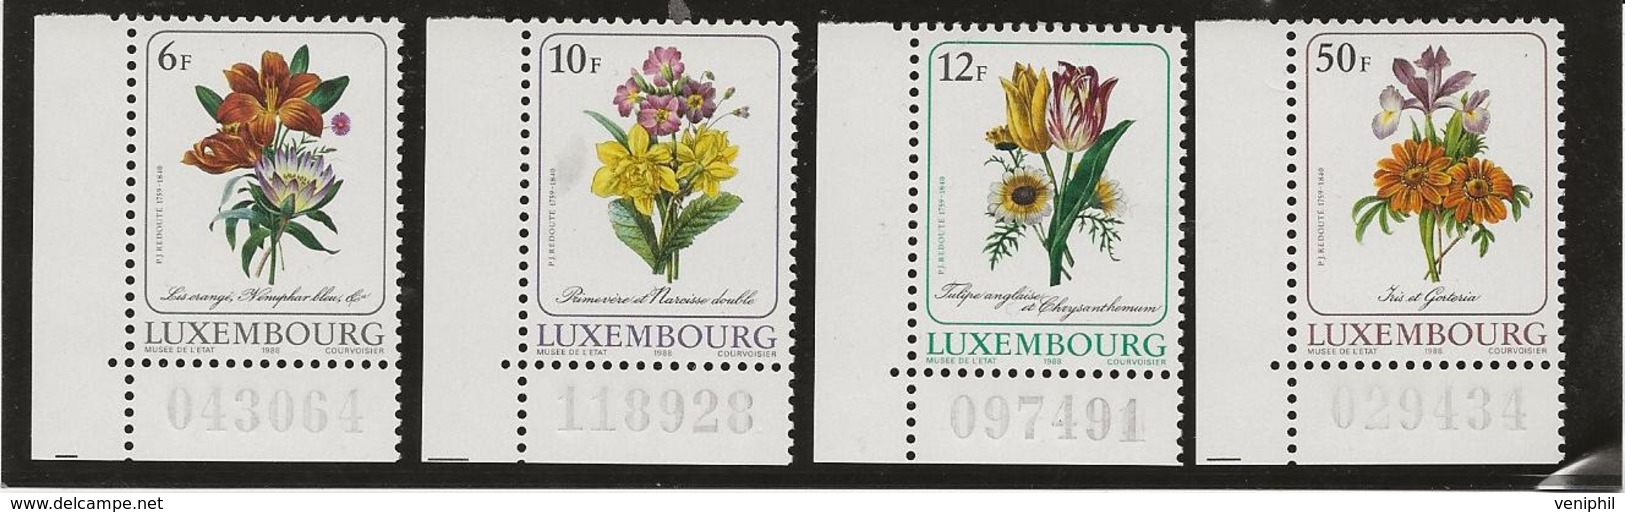 LUXEMBOURG - SERIE FLEURS N° 1140 A 1143 -NEUVE SANS CHARNIERE -ANNEE 1988 - Ungebraucht